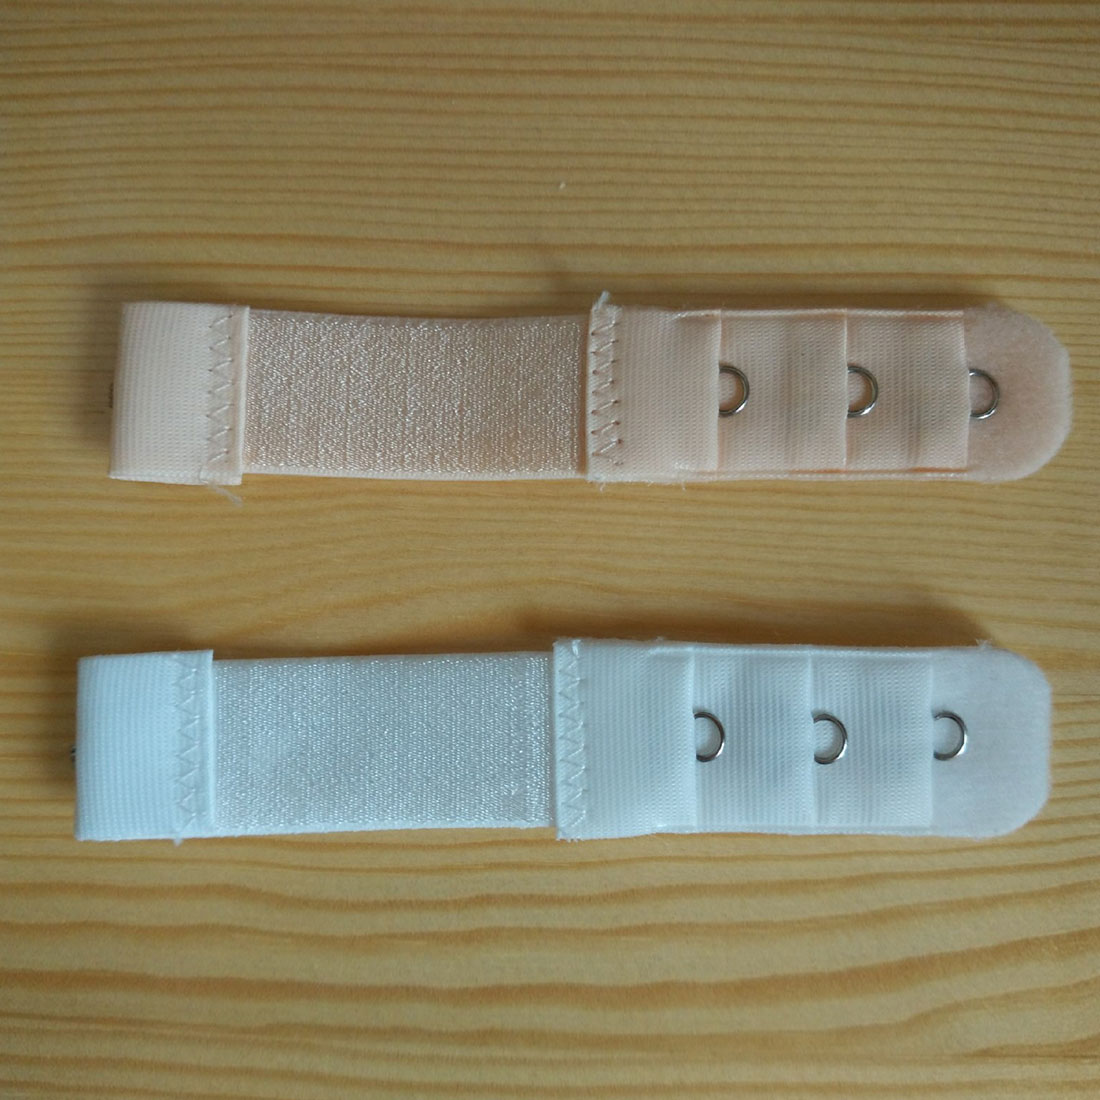 New 1pc 1 Rows 3 Hooks Bra Extender Nylon Clasp Extension Elastic On Strap Bra Extenders Adjustable Intimates Accessories